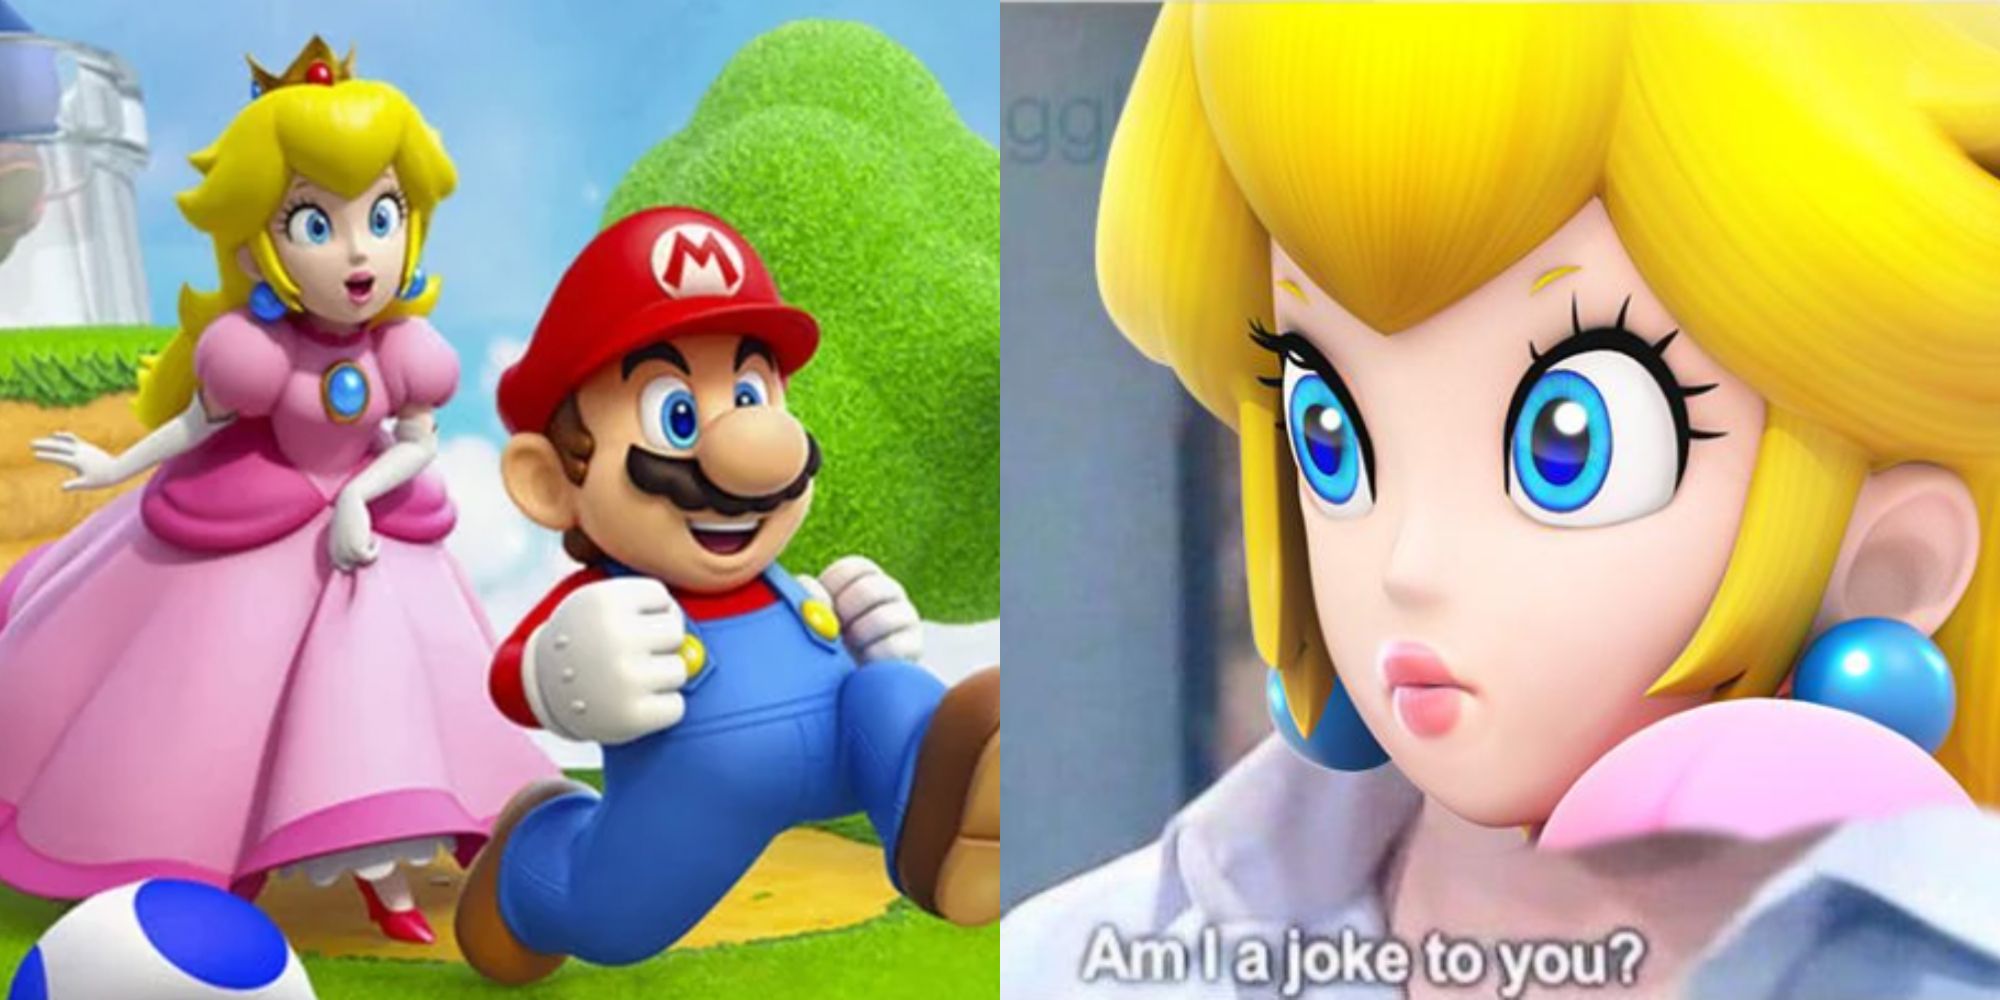 Princess Peach and Mario in promo shots and a meme featuring Peach